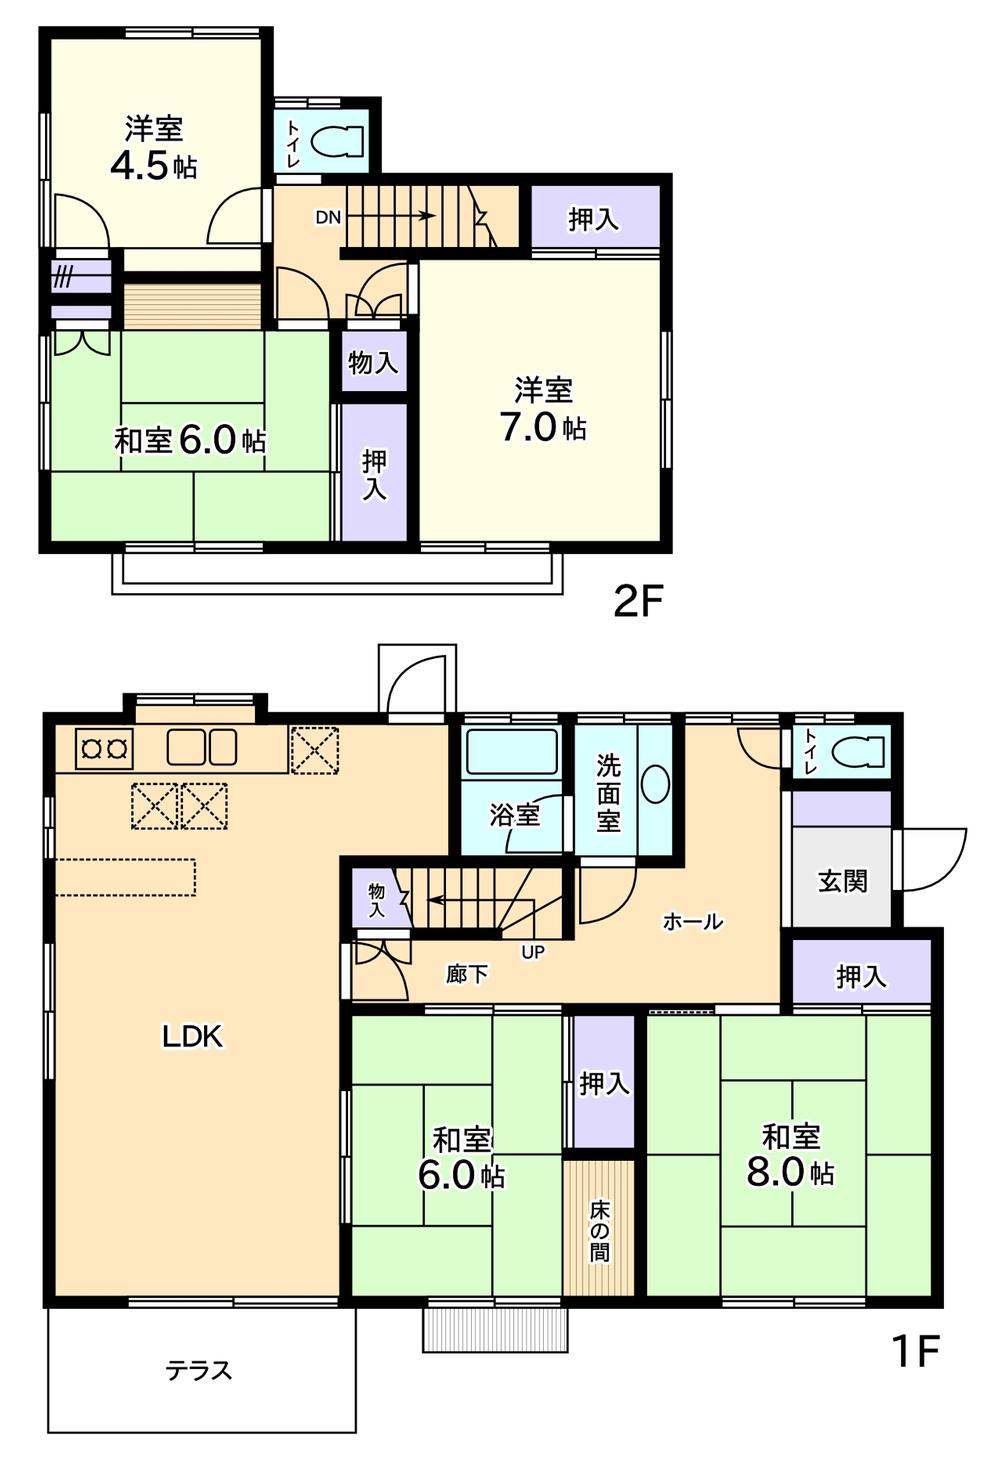 Floor plan. 21,800,000 yen, 5LDK, Land area 207.6 sq m , Building area 119.65 sq m